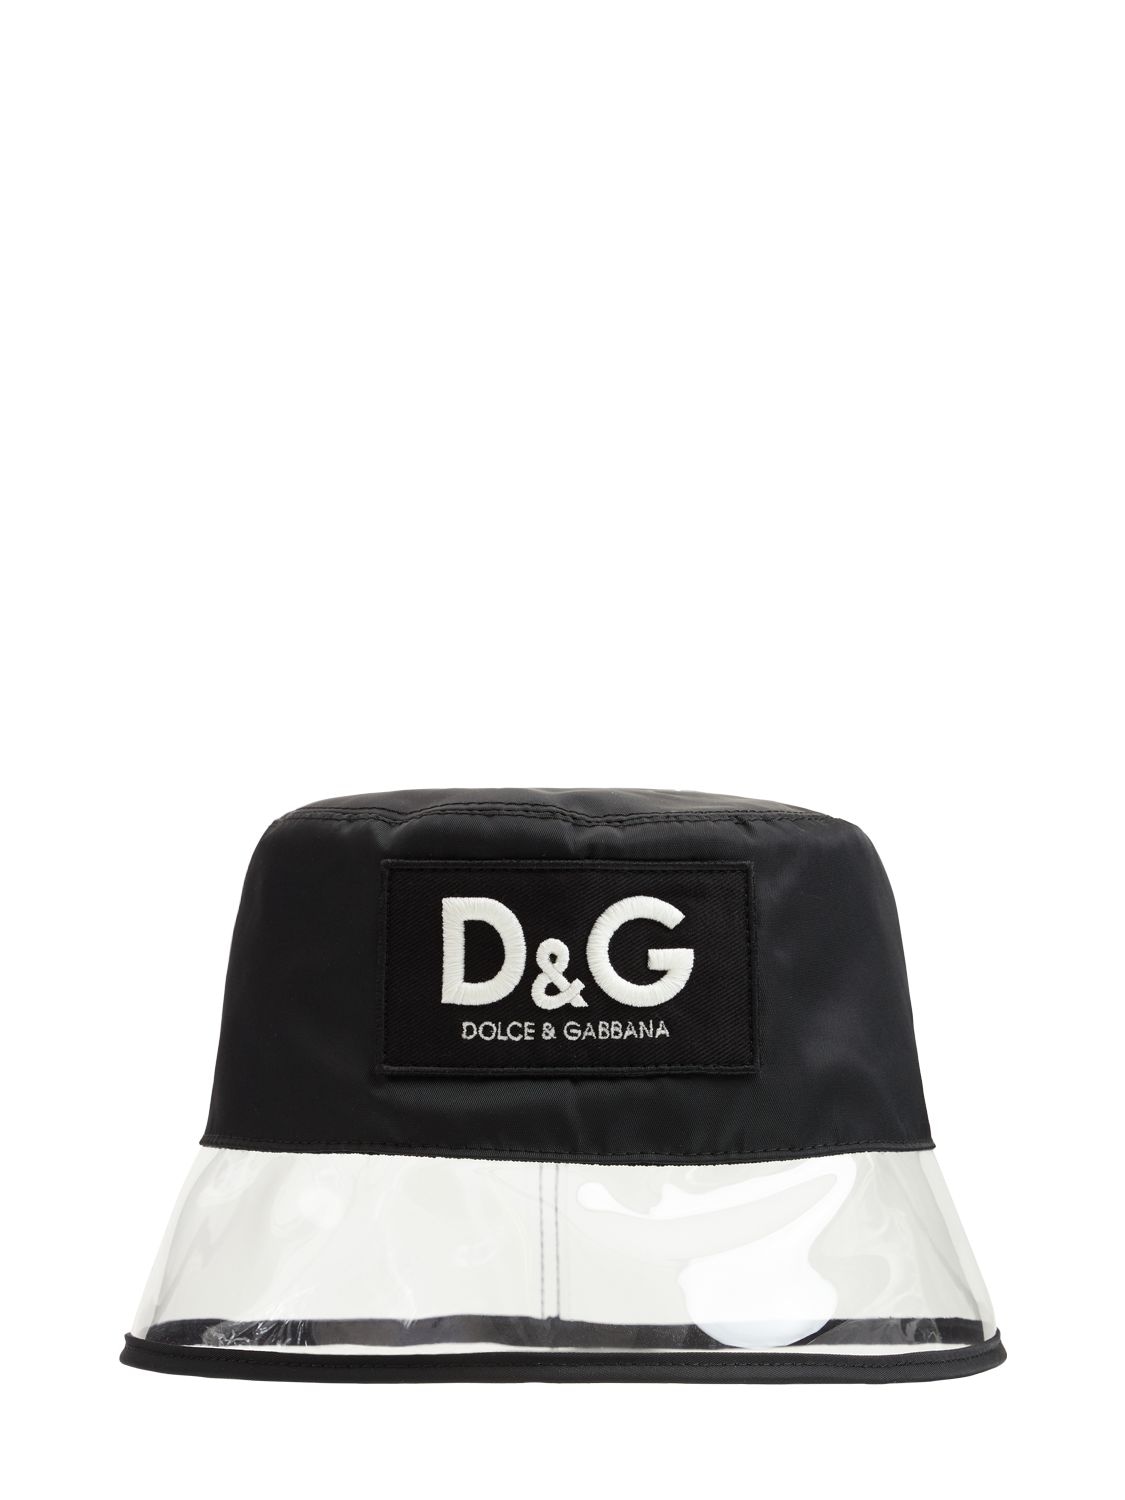 DOLCE & GABBANA D&G TECH & PLASTIC BUCKET HAT,74IG2H001-TJAWMDA1